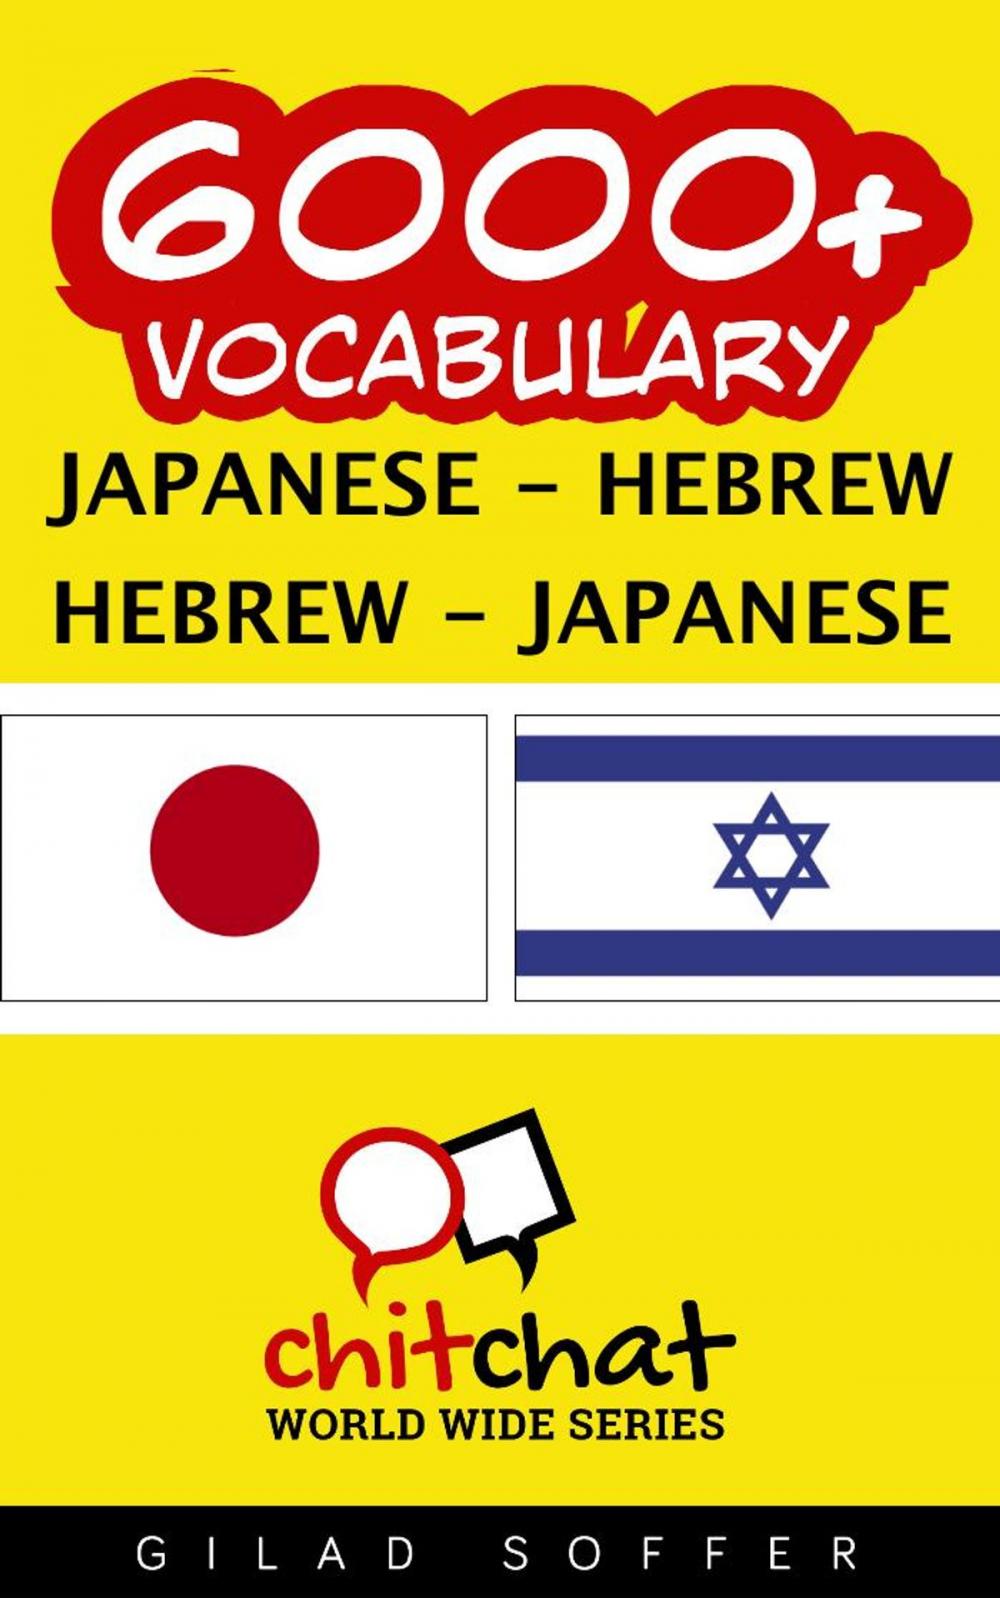 Big bigCover of 6000+ Vocabulary Japanese - Hebrew